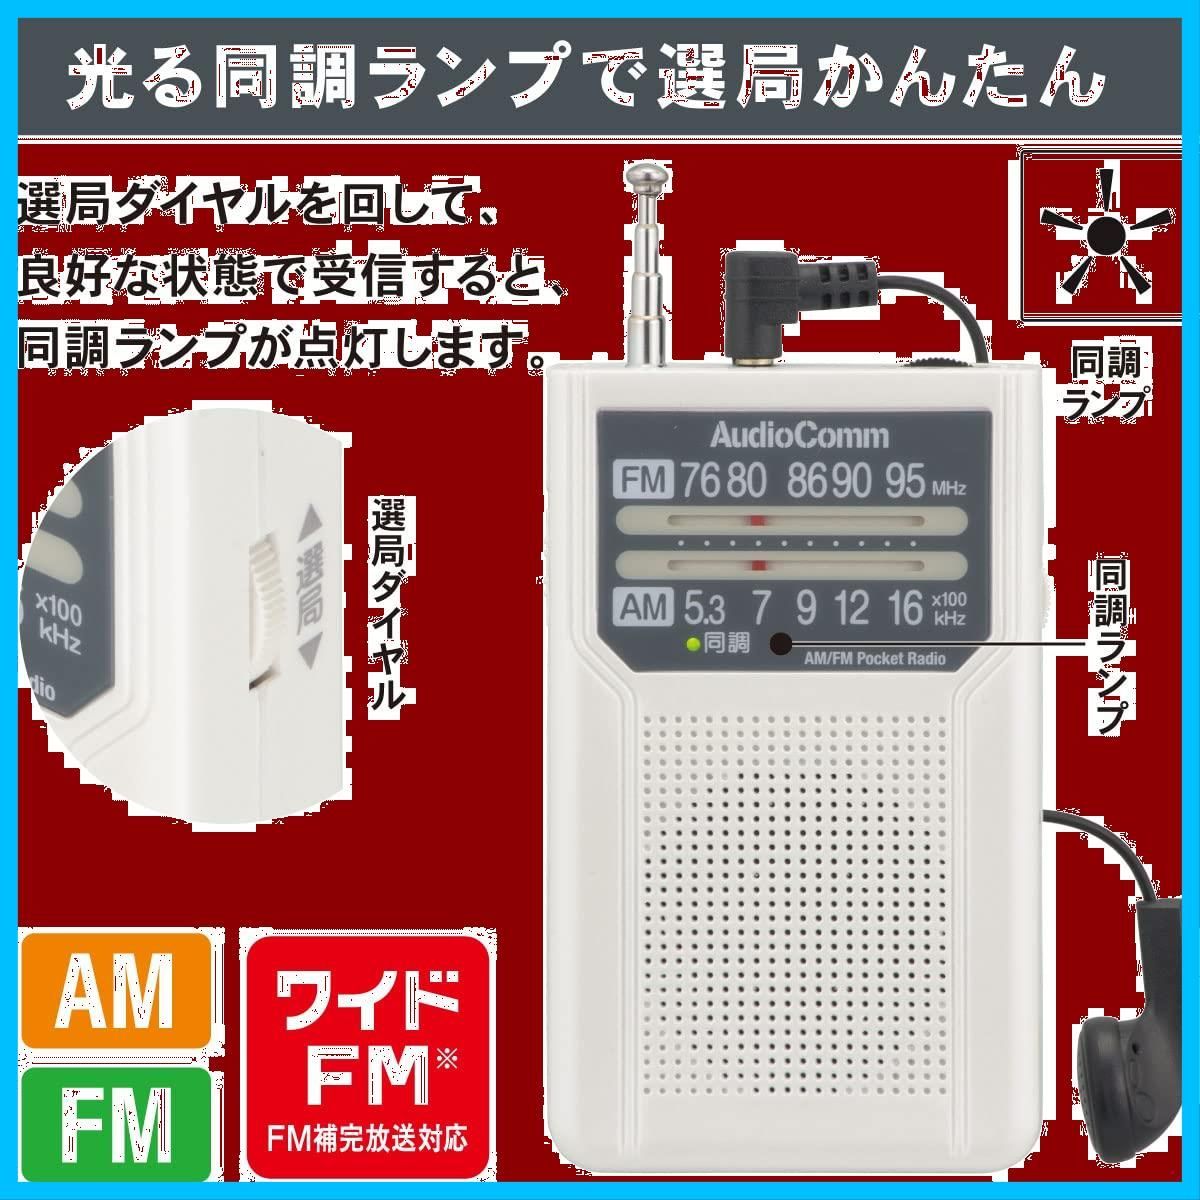 03-7271 RAD-P136N-W ホワイト 電池長持ちタイプ 電池式 コンパクトラジオ ポータブルラジオ AM/FMポケットラジオ  電機AudioComm オーム(OHM) - メルカリ